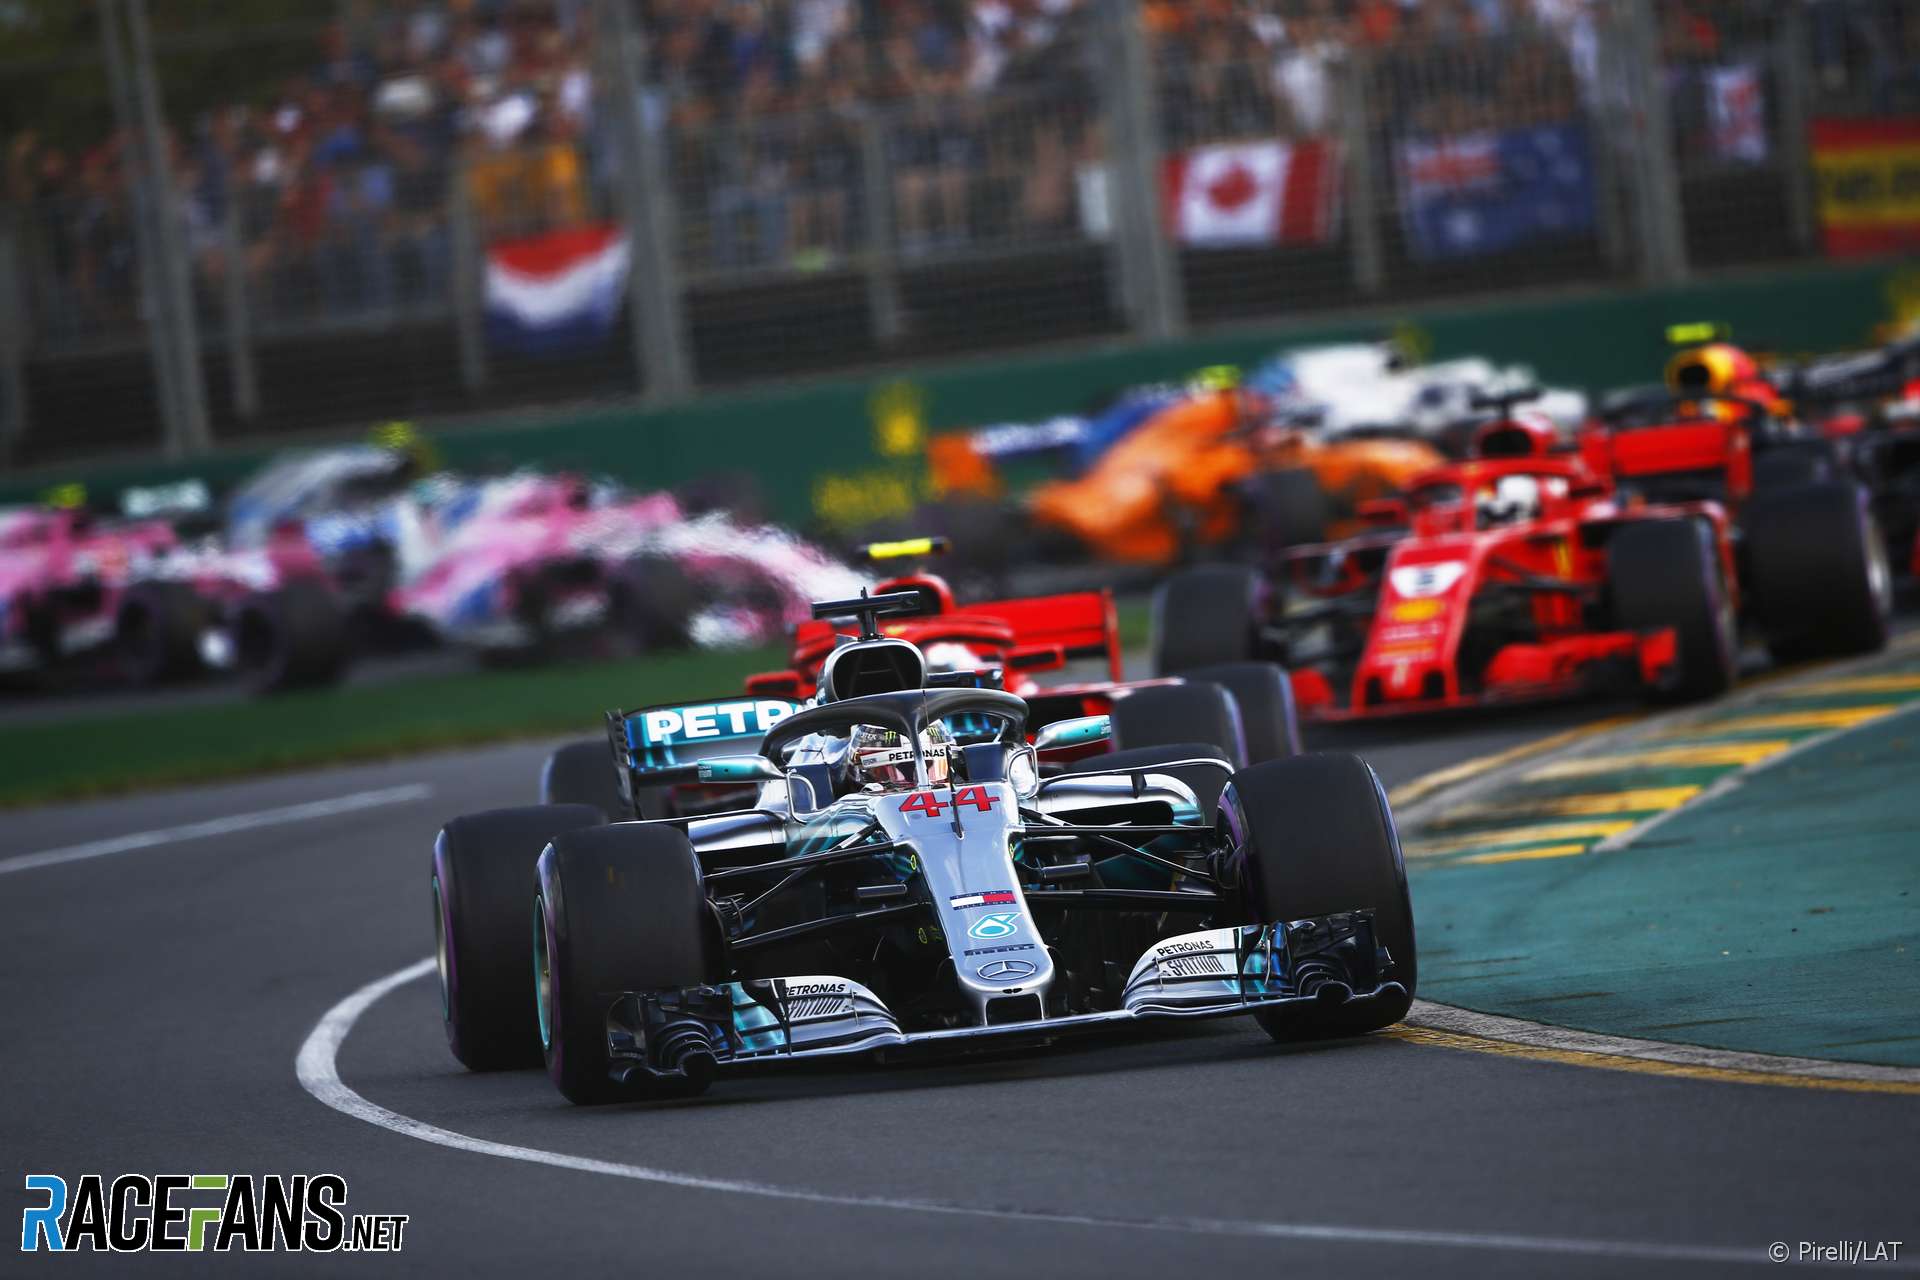 The start of the 2018 Formula 1 season in Melbourne, Australia